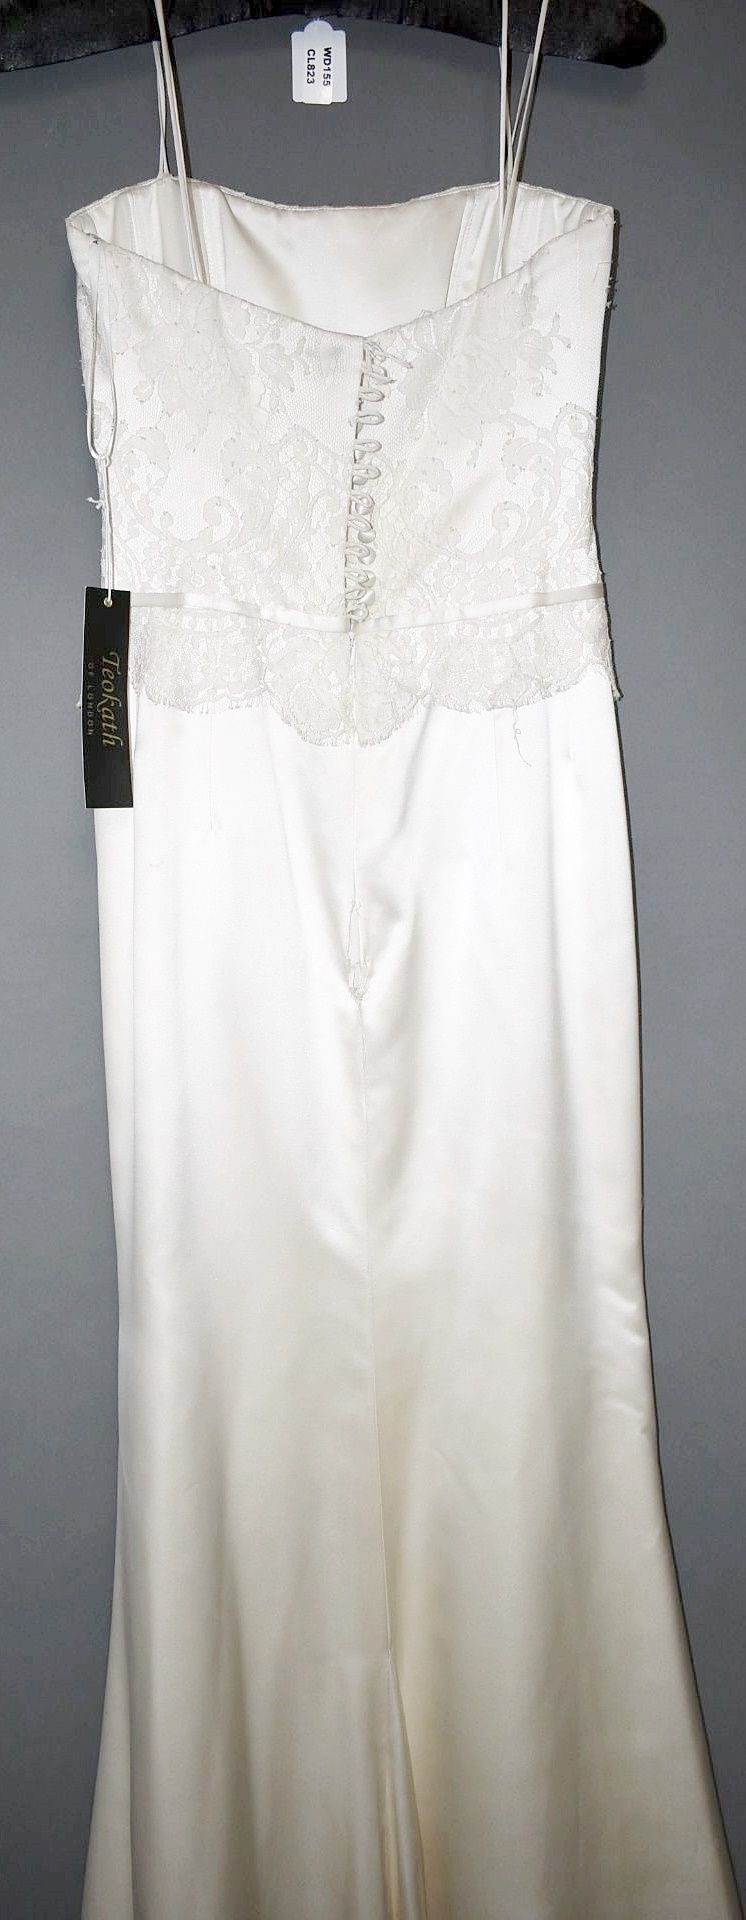 1 x ALAN HANNAH Strapless Lace Bodice Fishtail Designer Wedding Dress Bridal Gown RRP £1,900 UK12 - Image 3 of 6